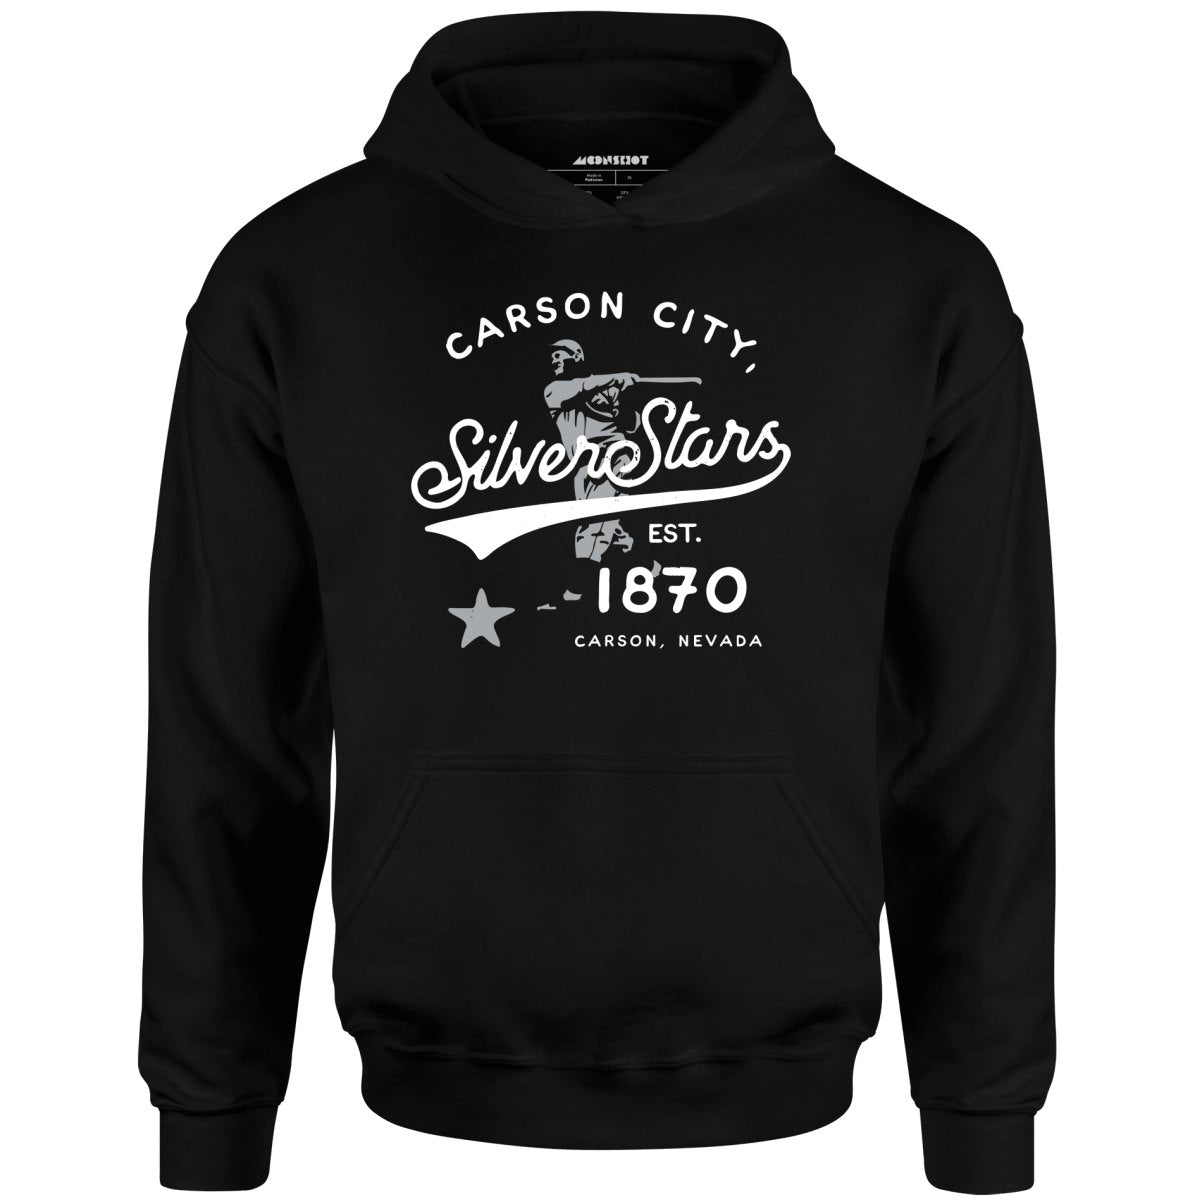 Carson City Silver Stars - Nevada - Vintage Defunct Baseball Teams - Unisex Hoodie